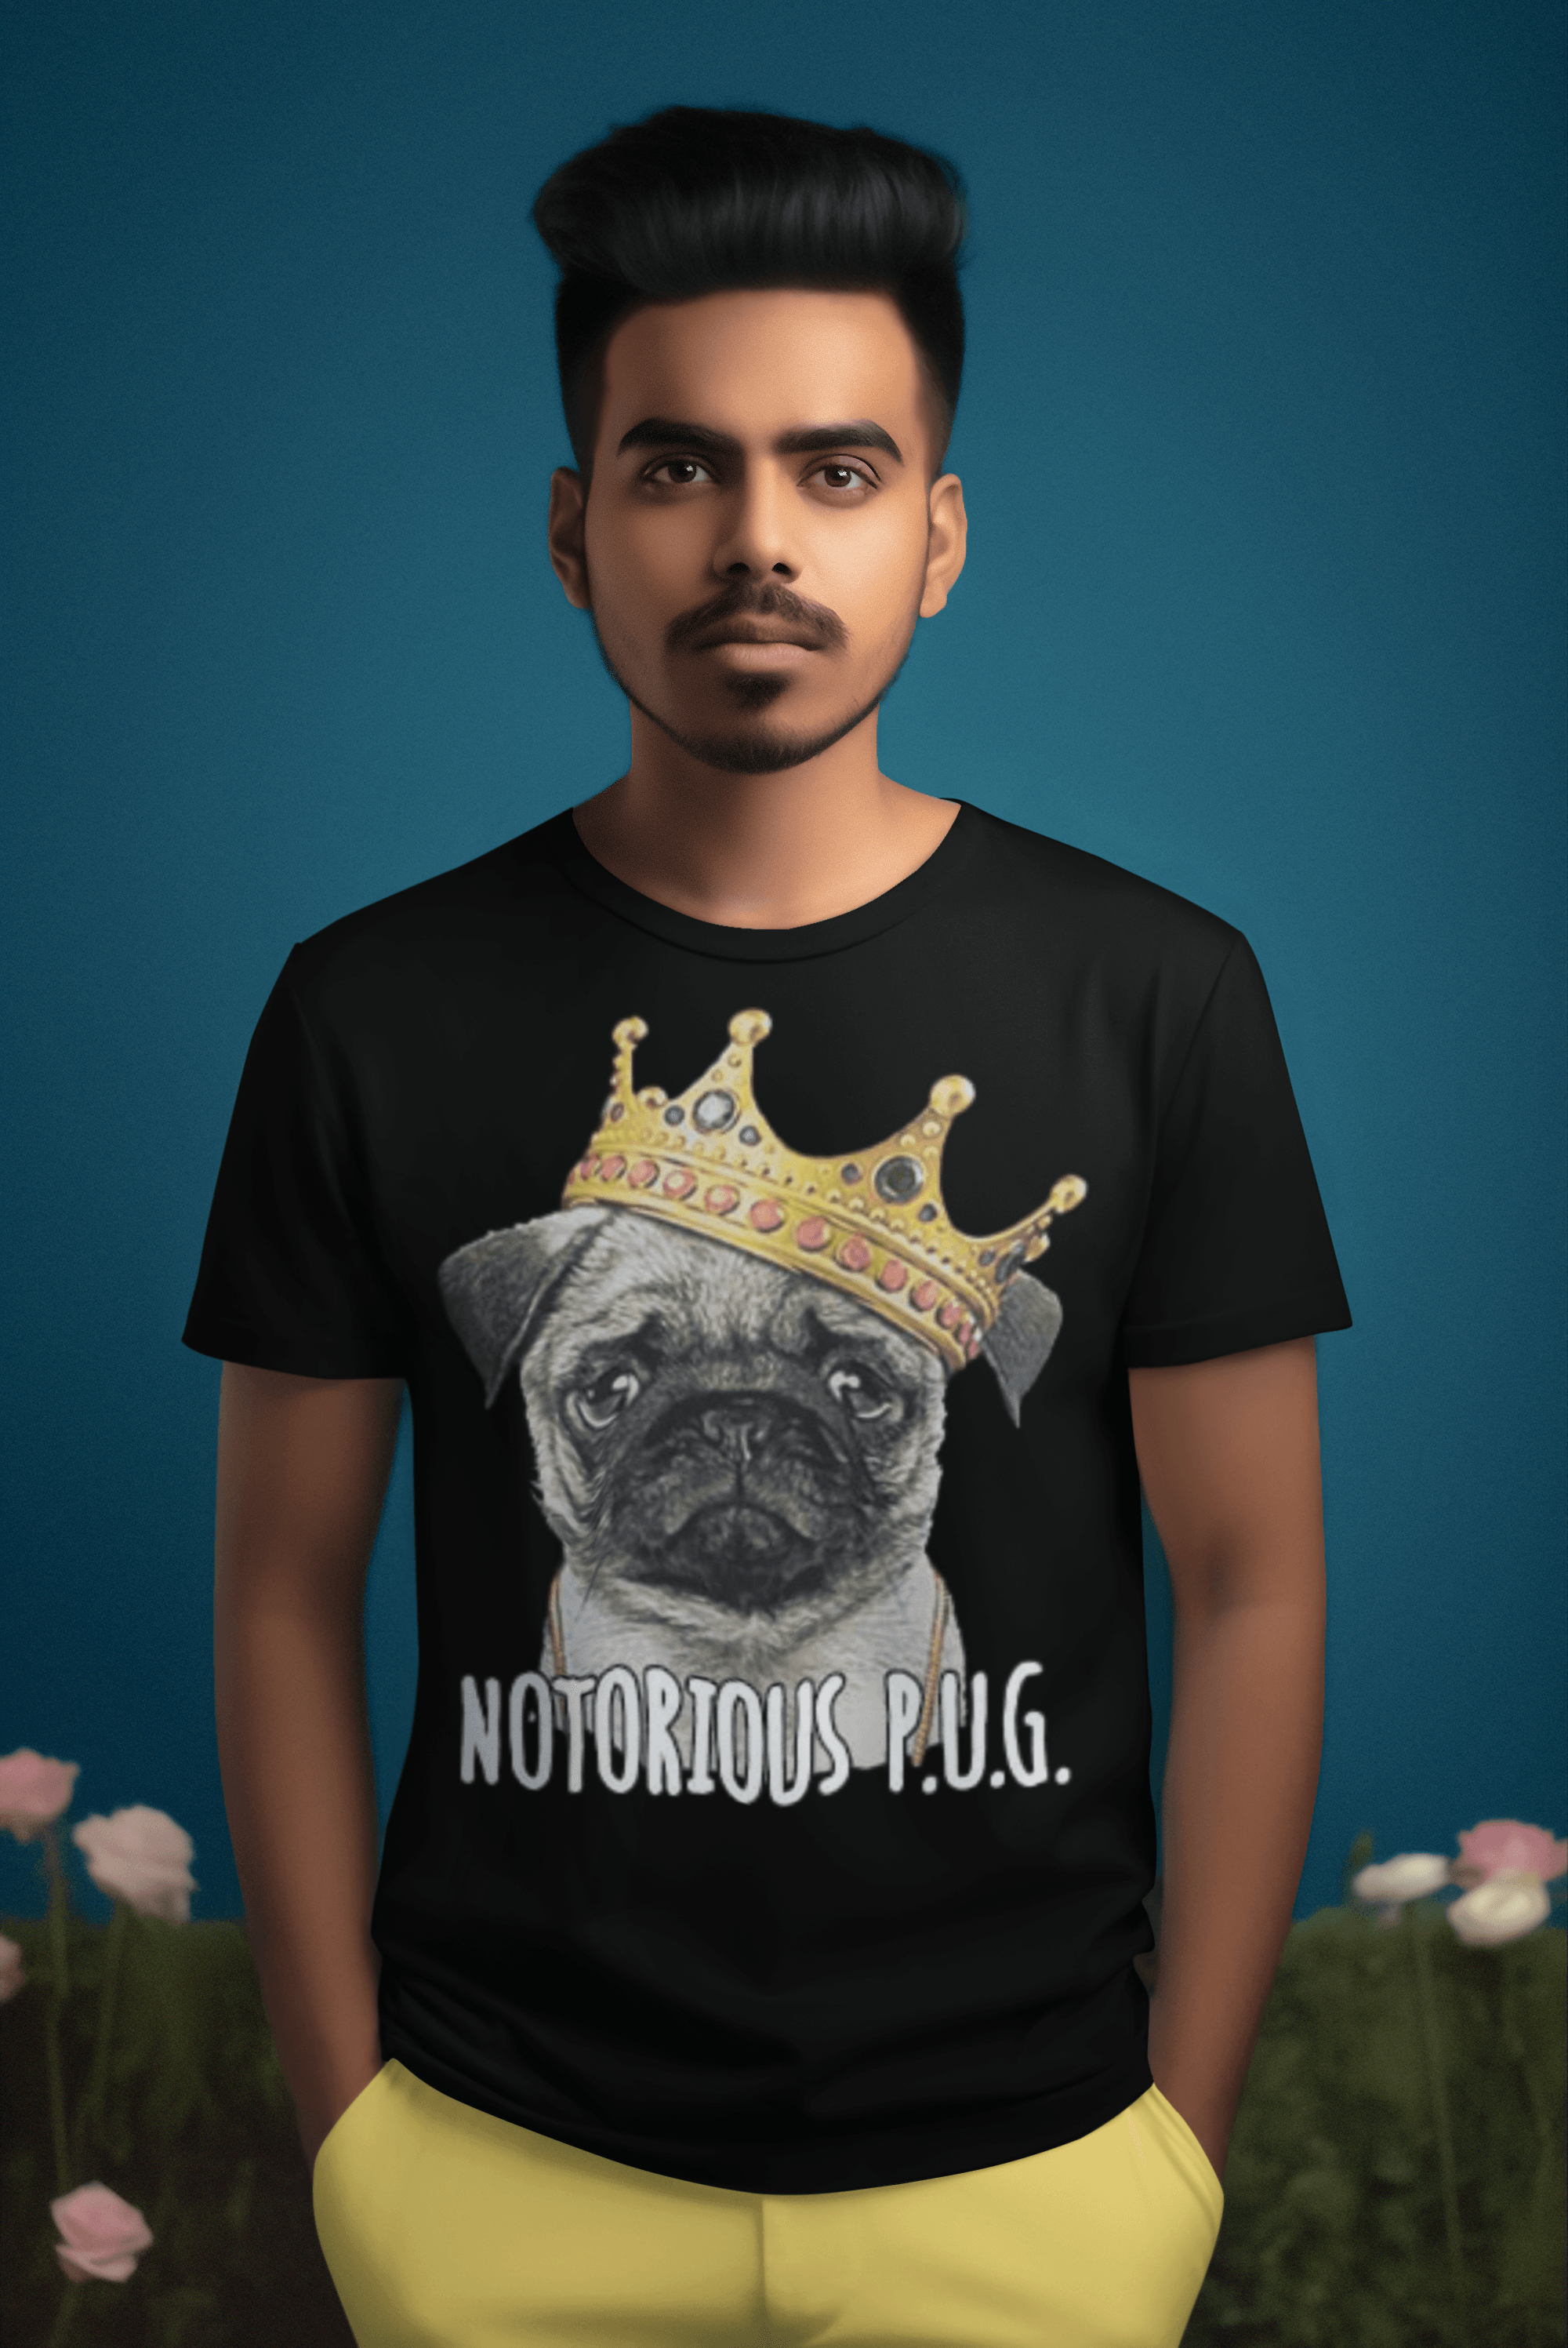 Pet Owner T-shirt The Notorious P.U.G Short Sleeve Soft Style Cotton Top - TopKoalaTee